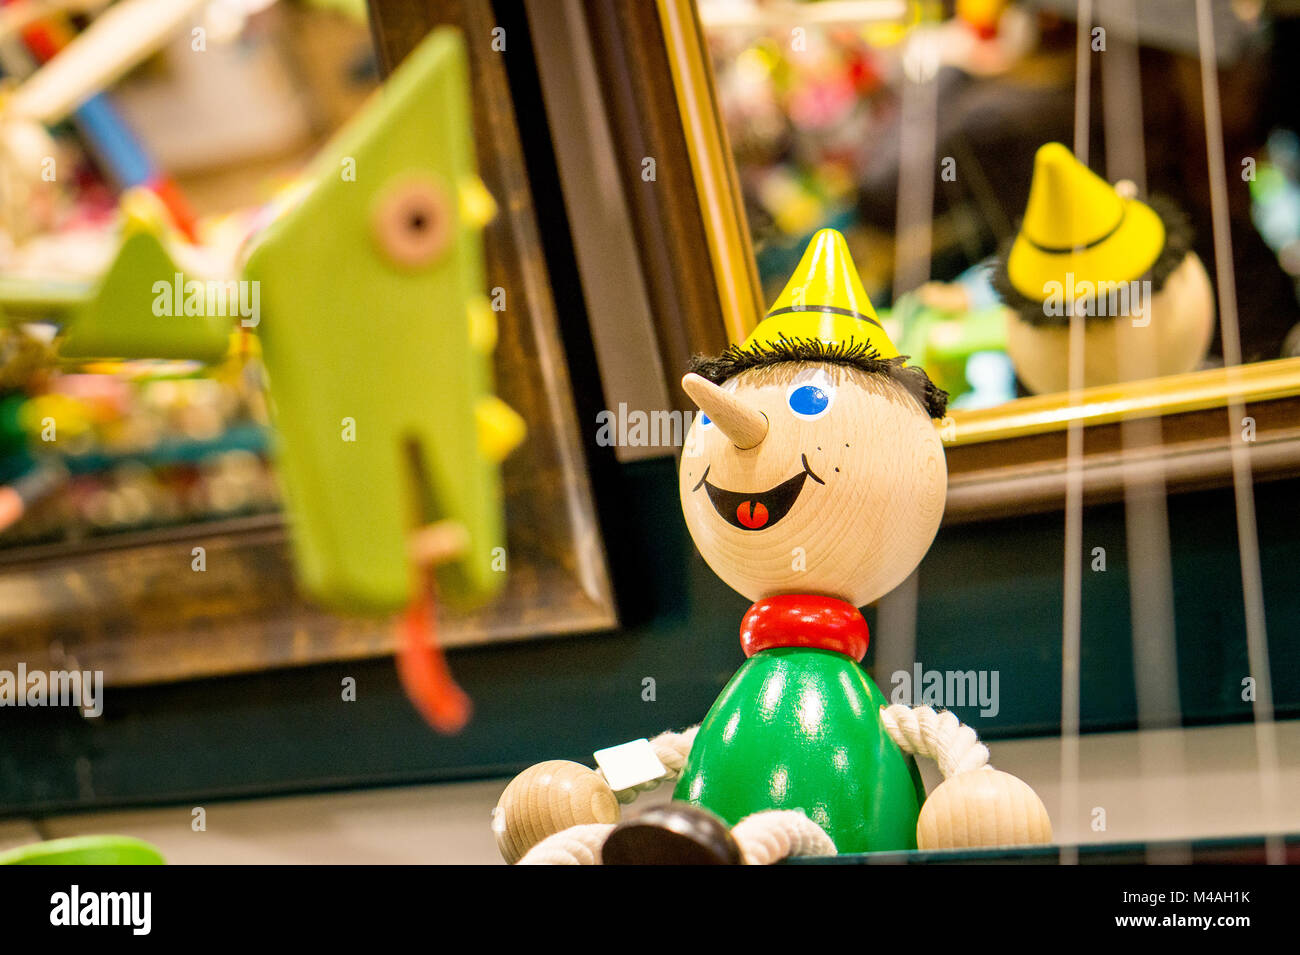 A wooden boy figure on a toy store shelf. Stock Photo